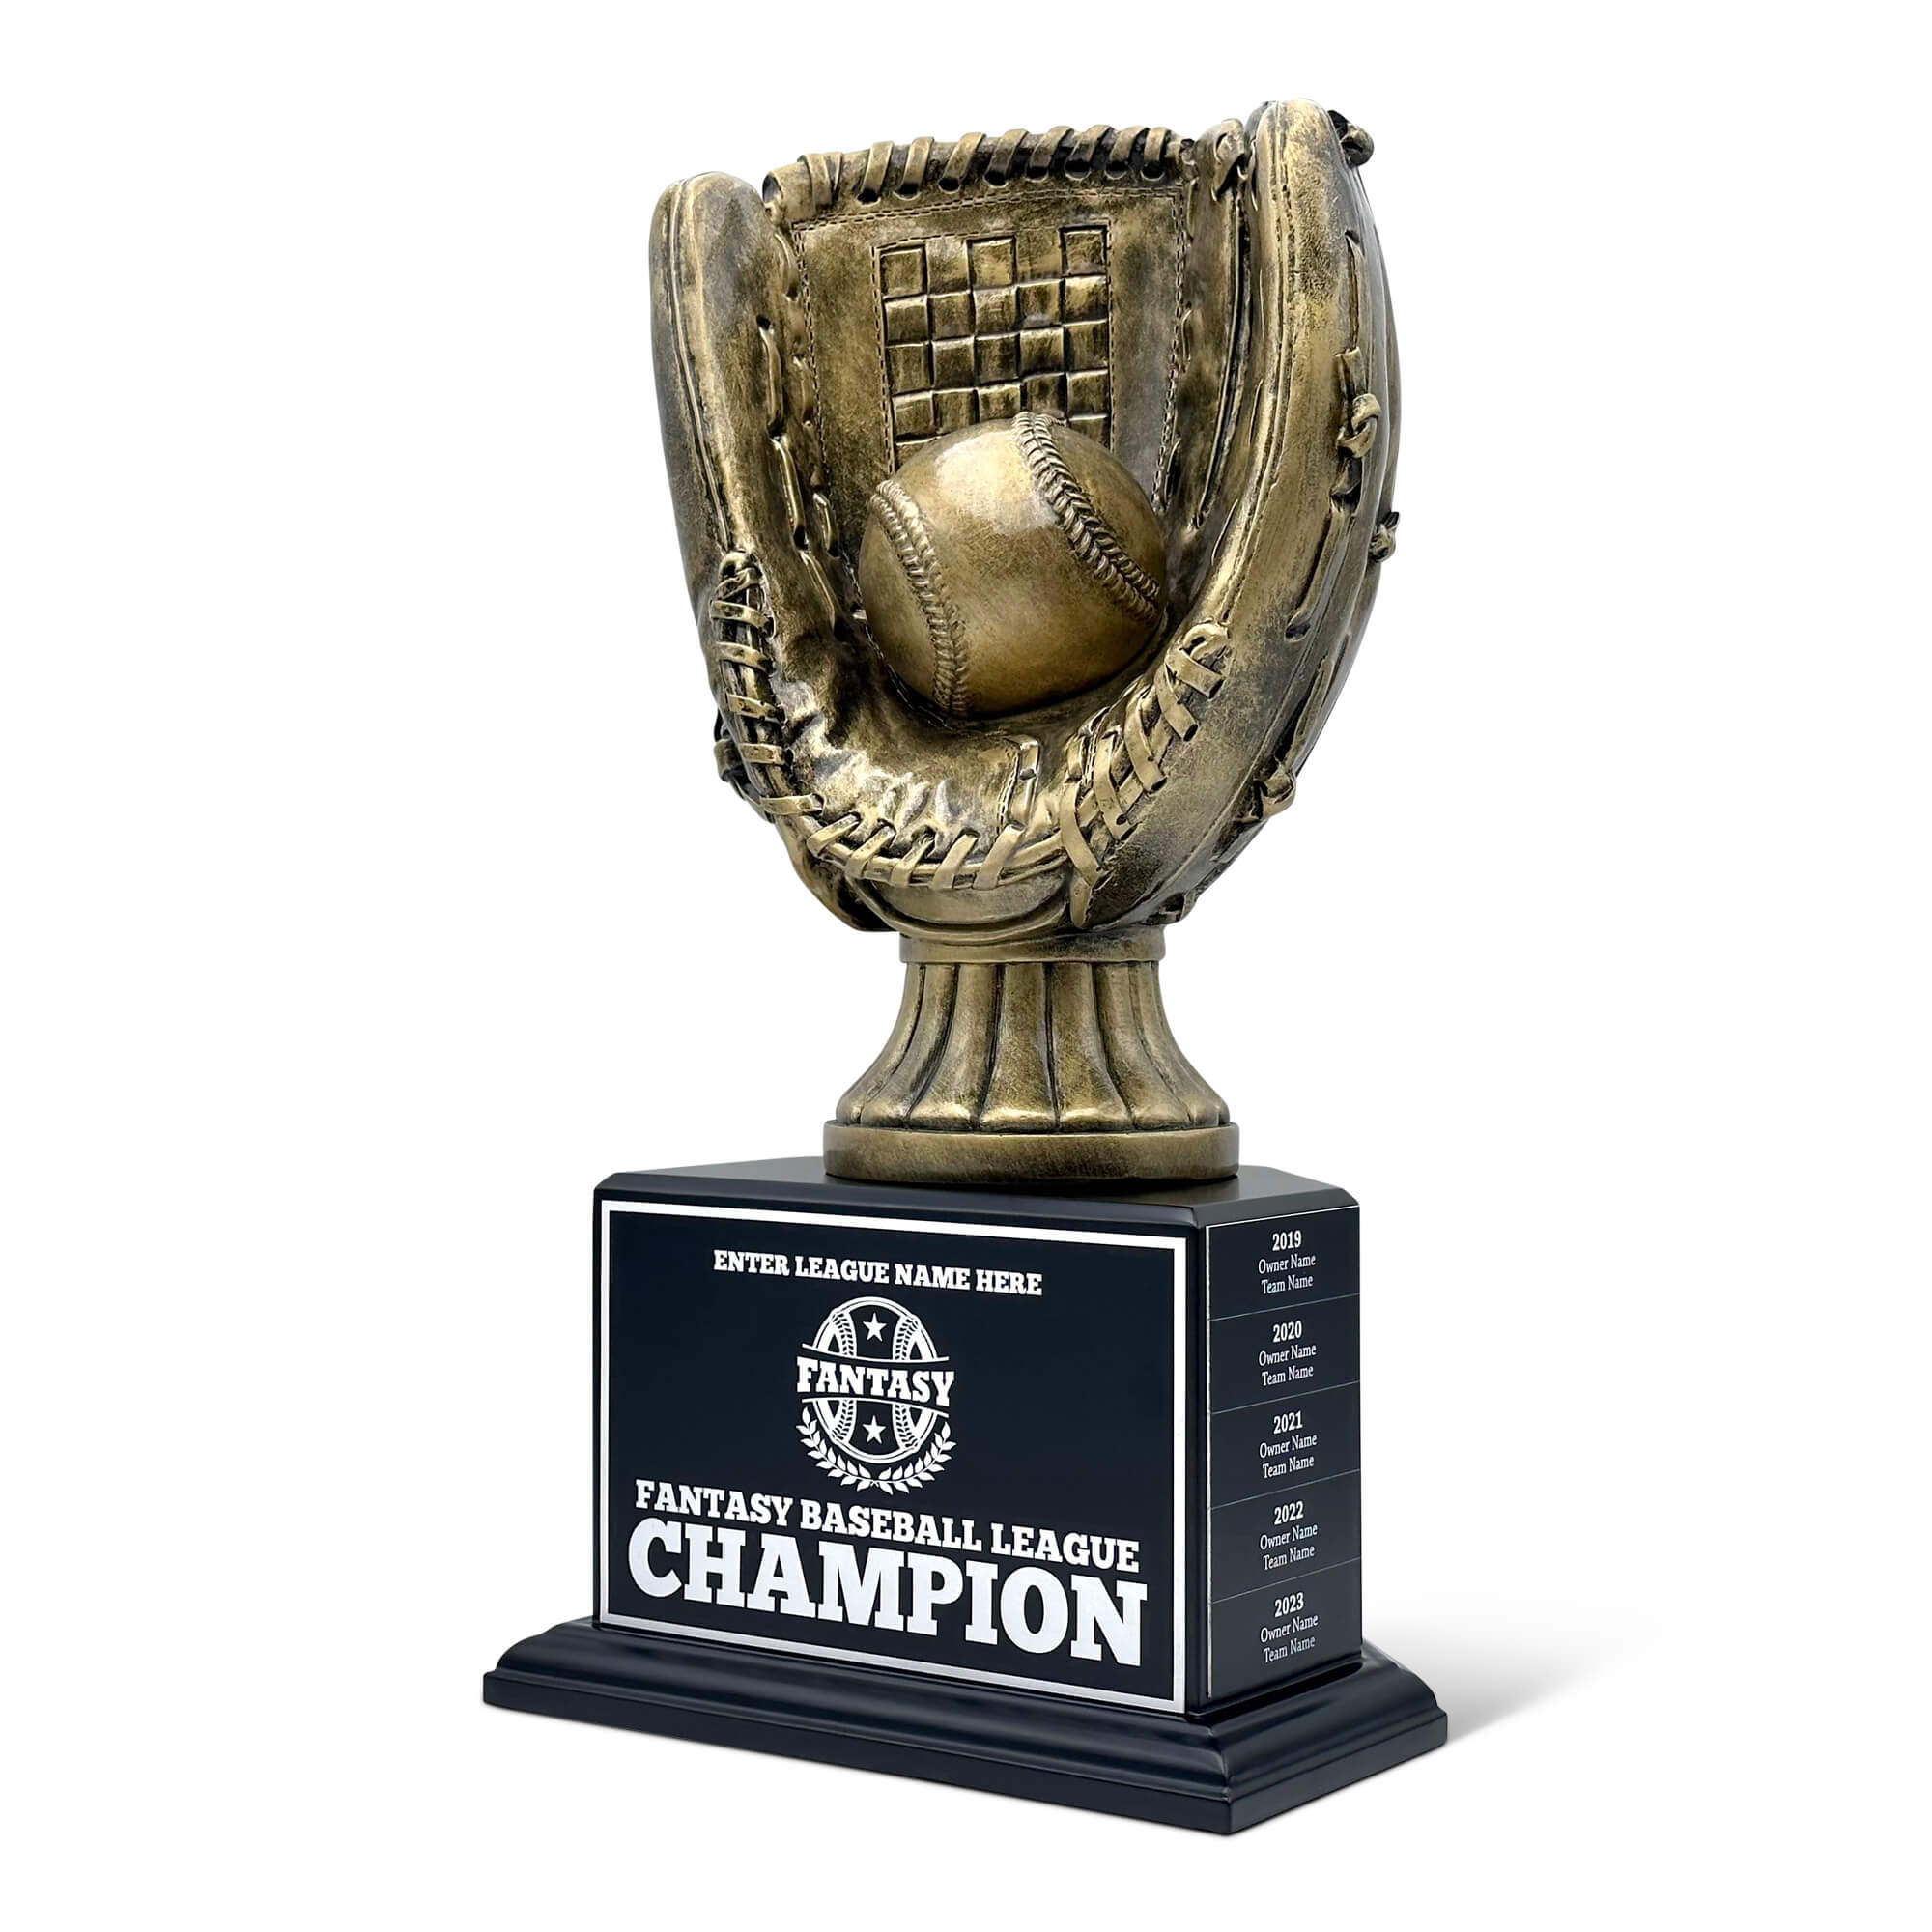 Fantasy Baseball Golden Glove Trophy - 25 Year Perpetual